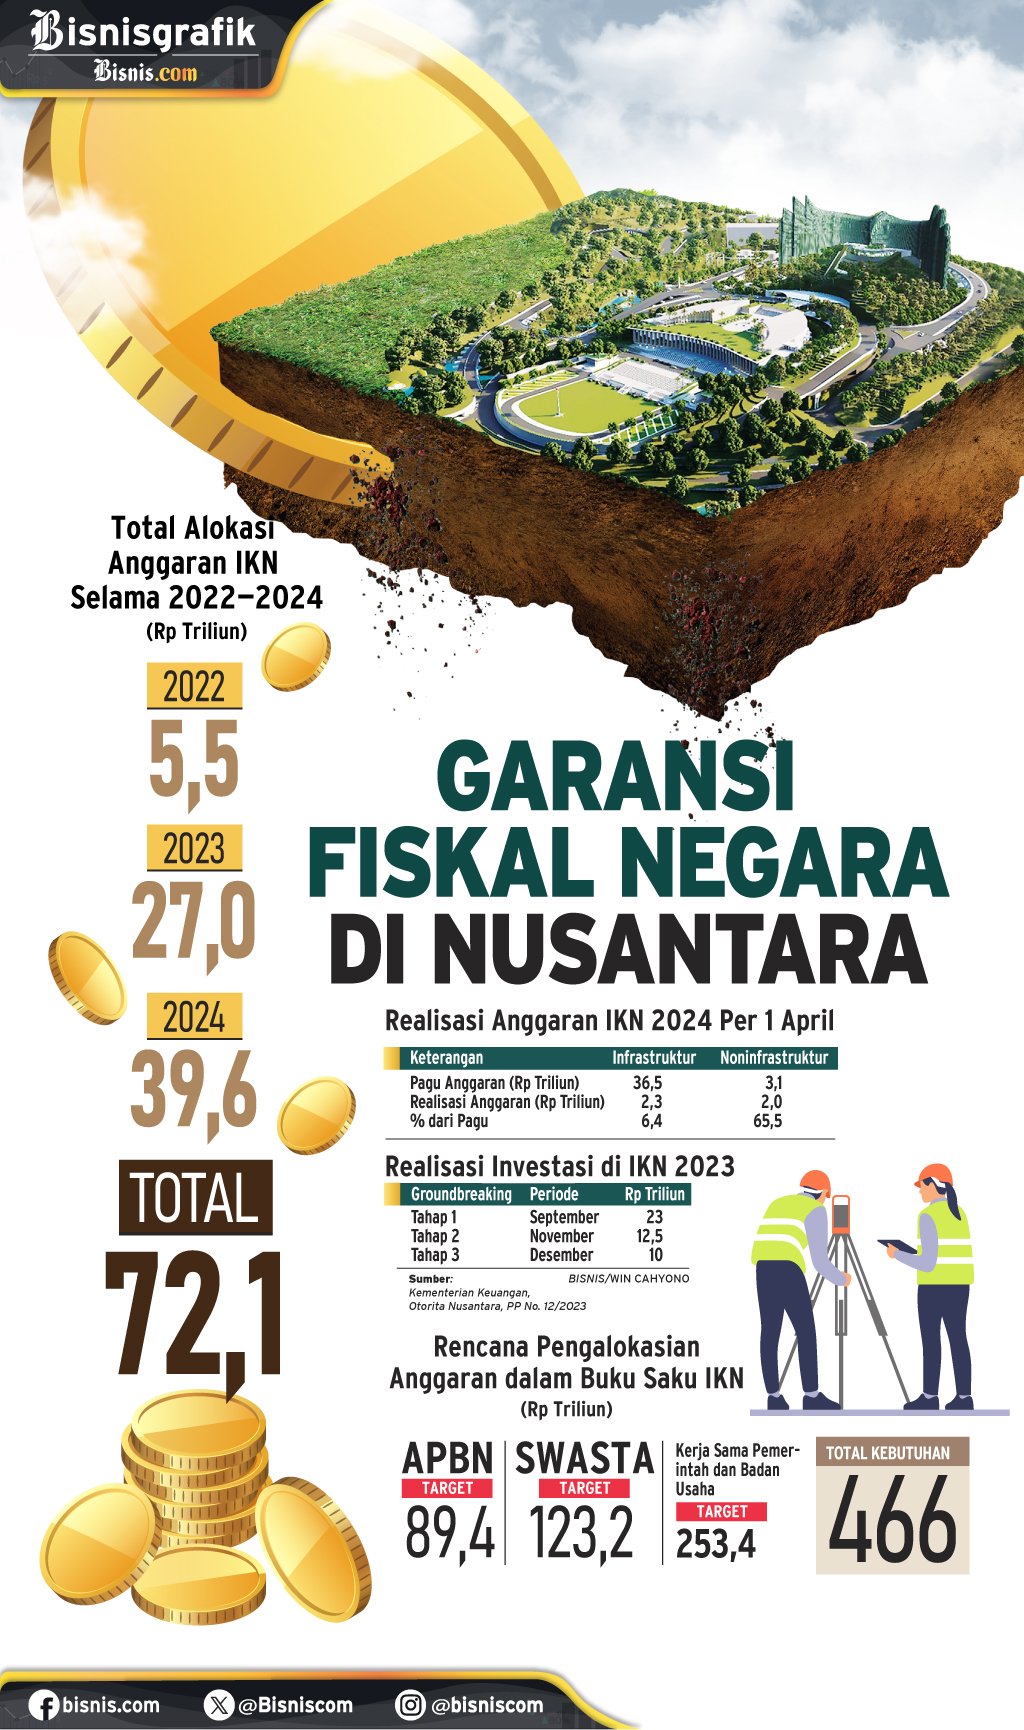 STIMULUS APBN : Garansi Fiskal Negara di Nusantara